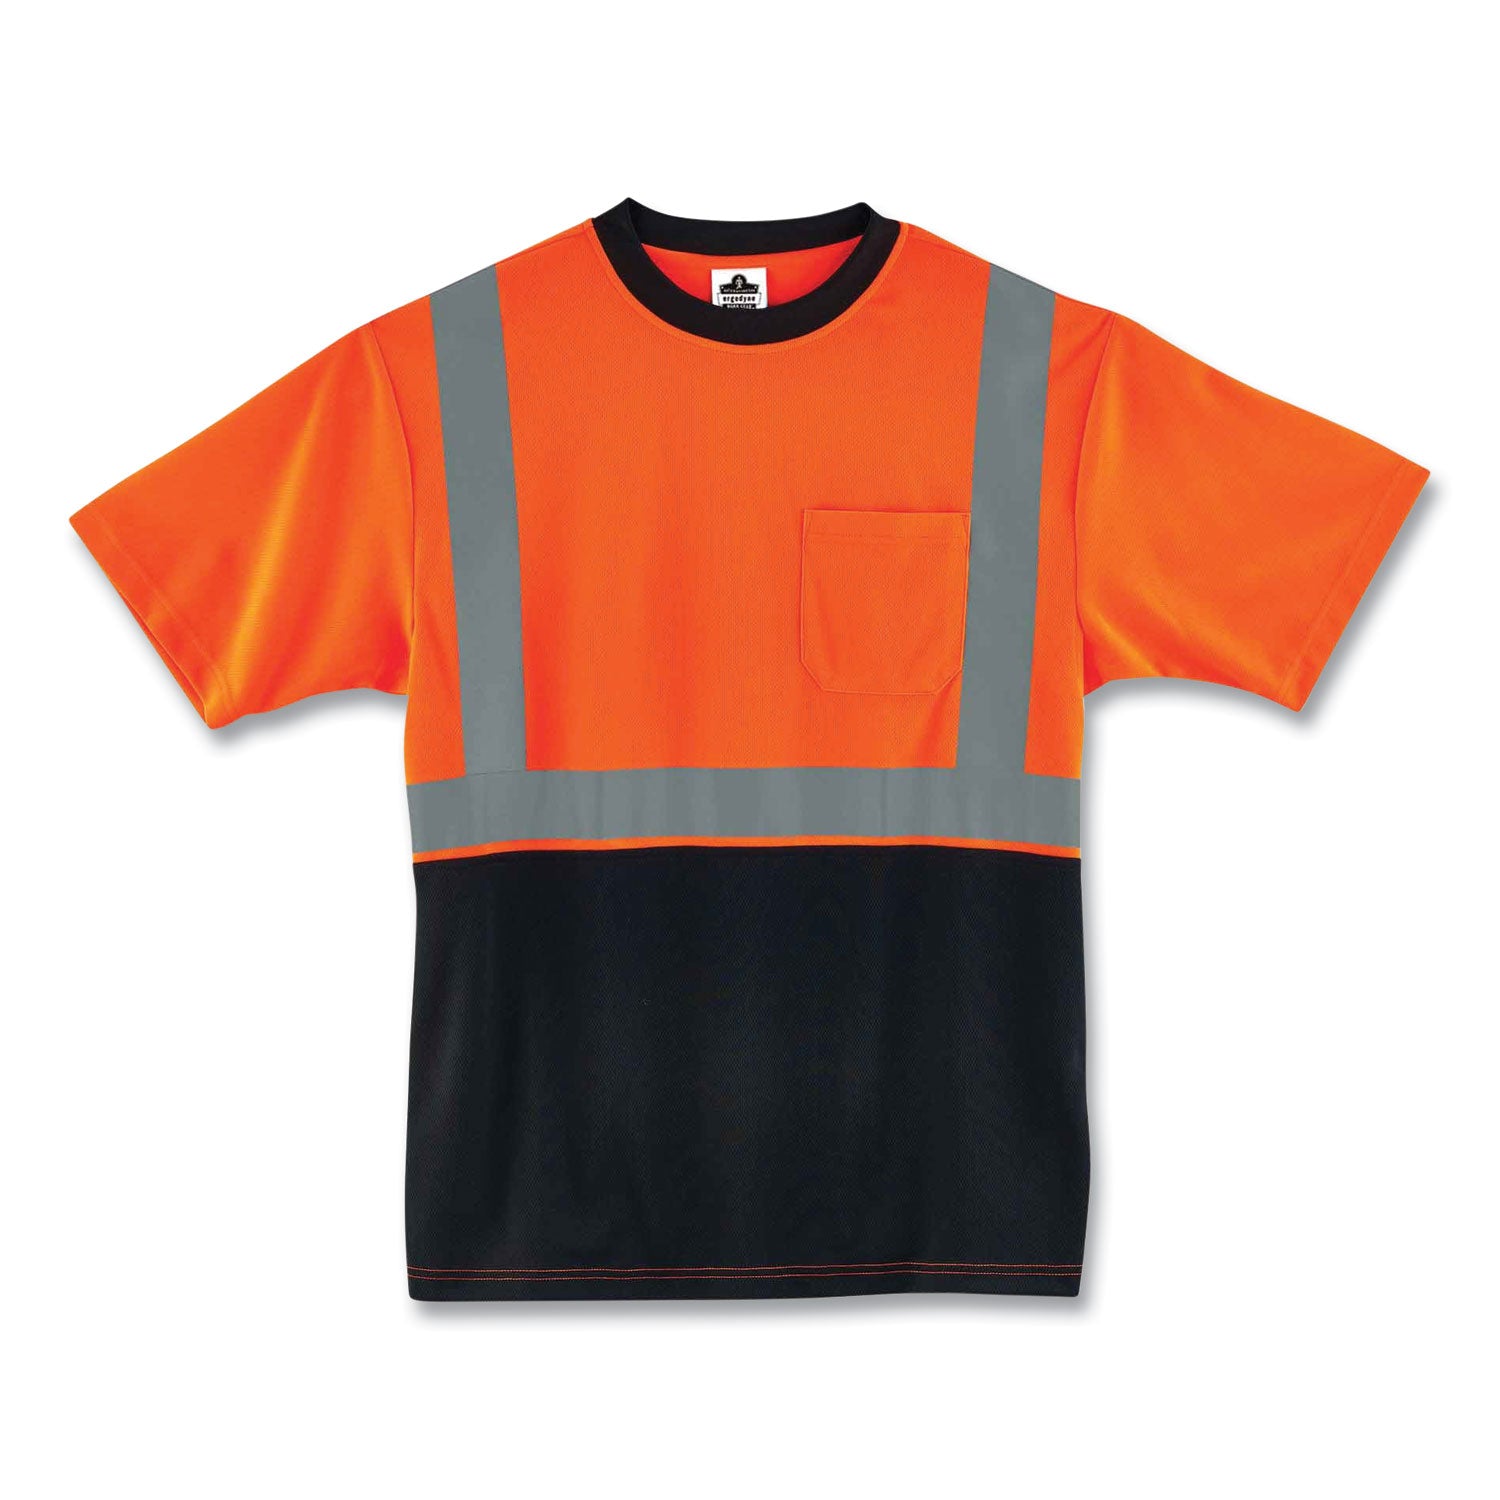 glowear-8289bk-class-2-hi-vis-t-shirt-with-black-bottom-medium-orange-ships-in-1-3-business-days_ego22513 - 1